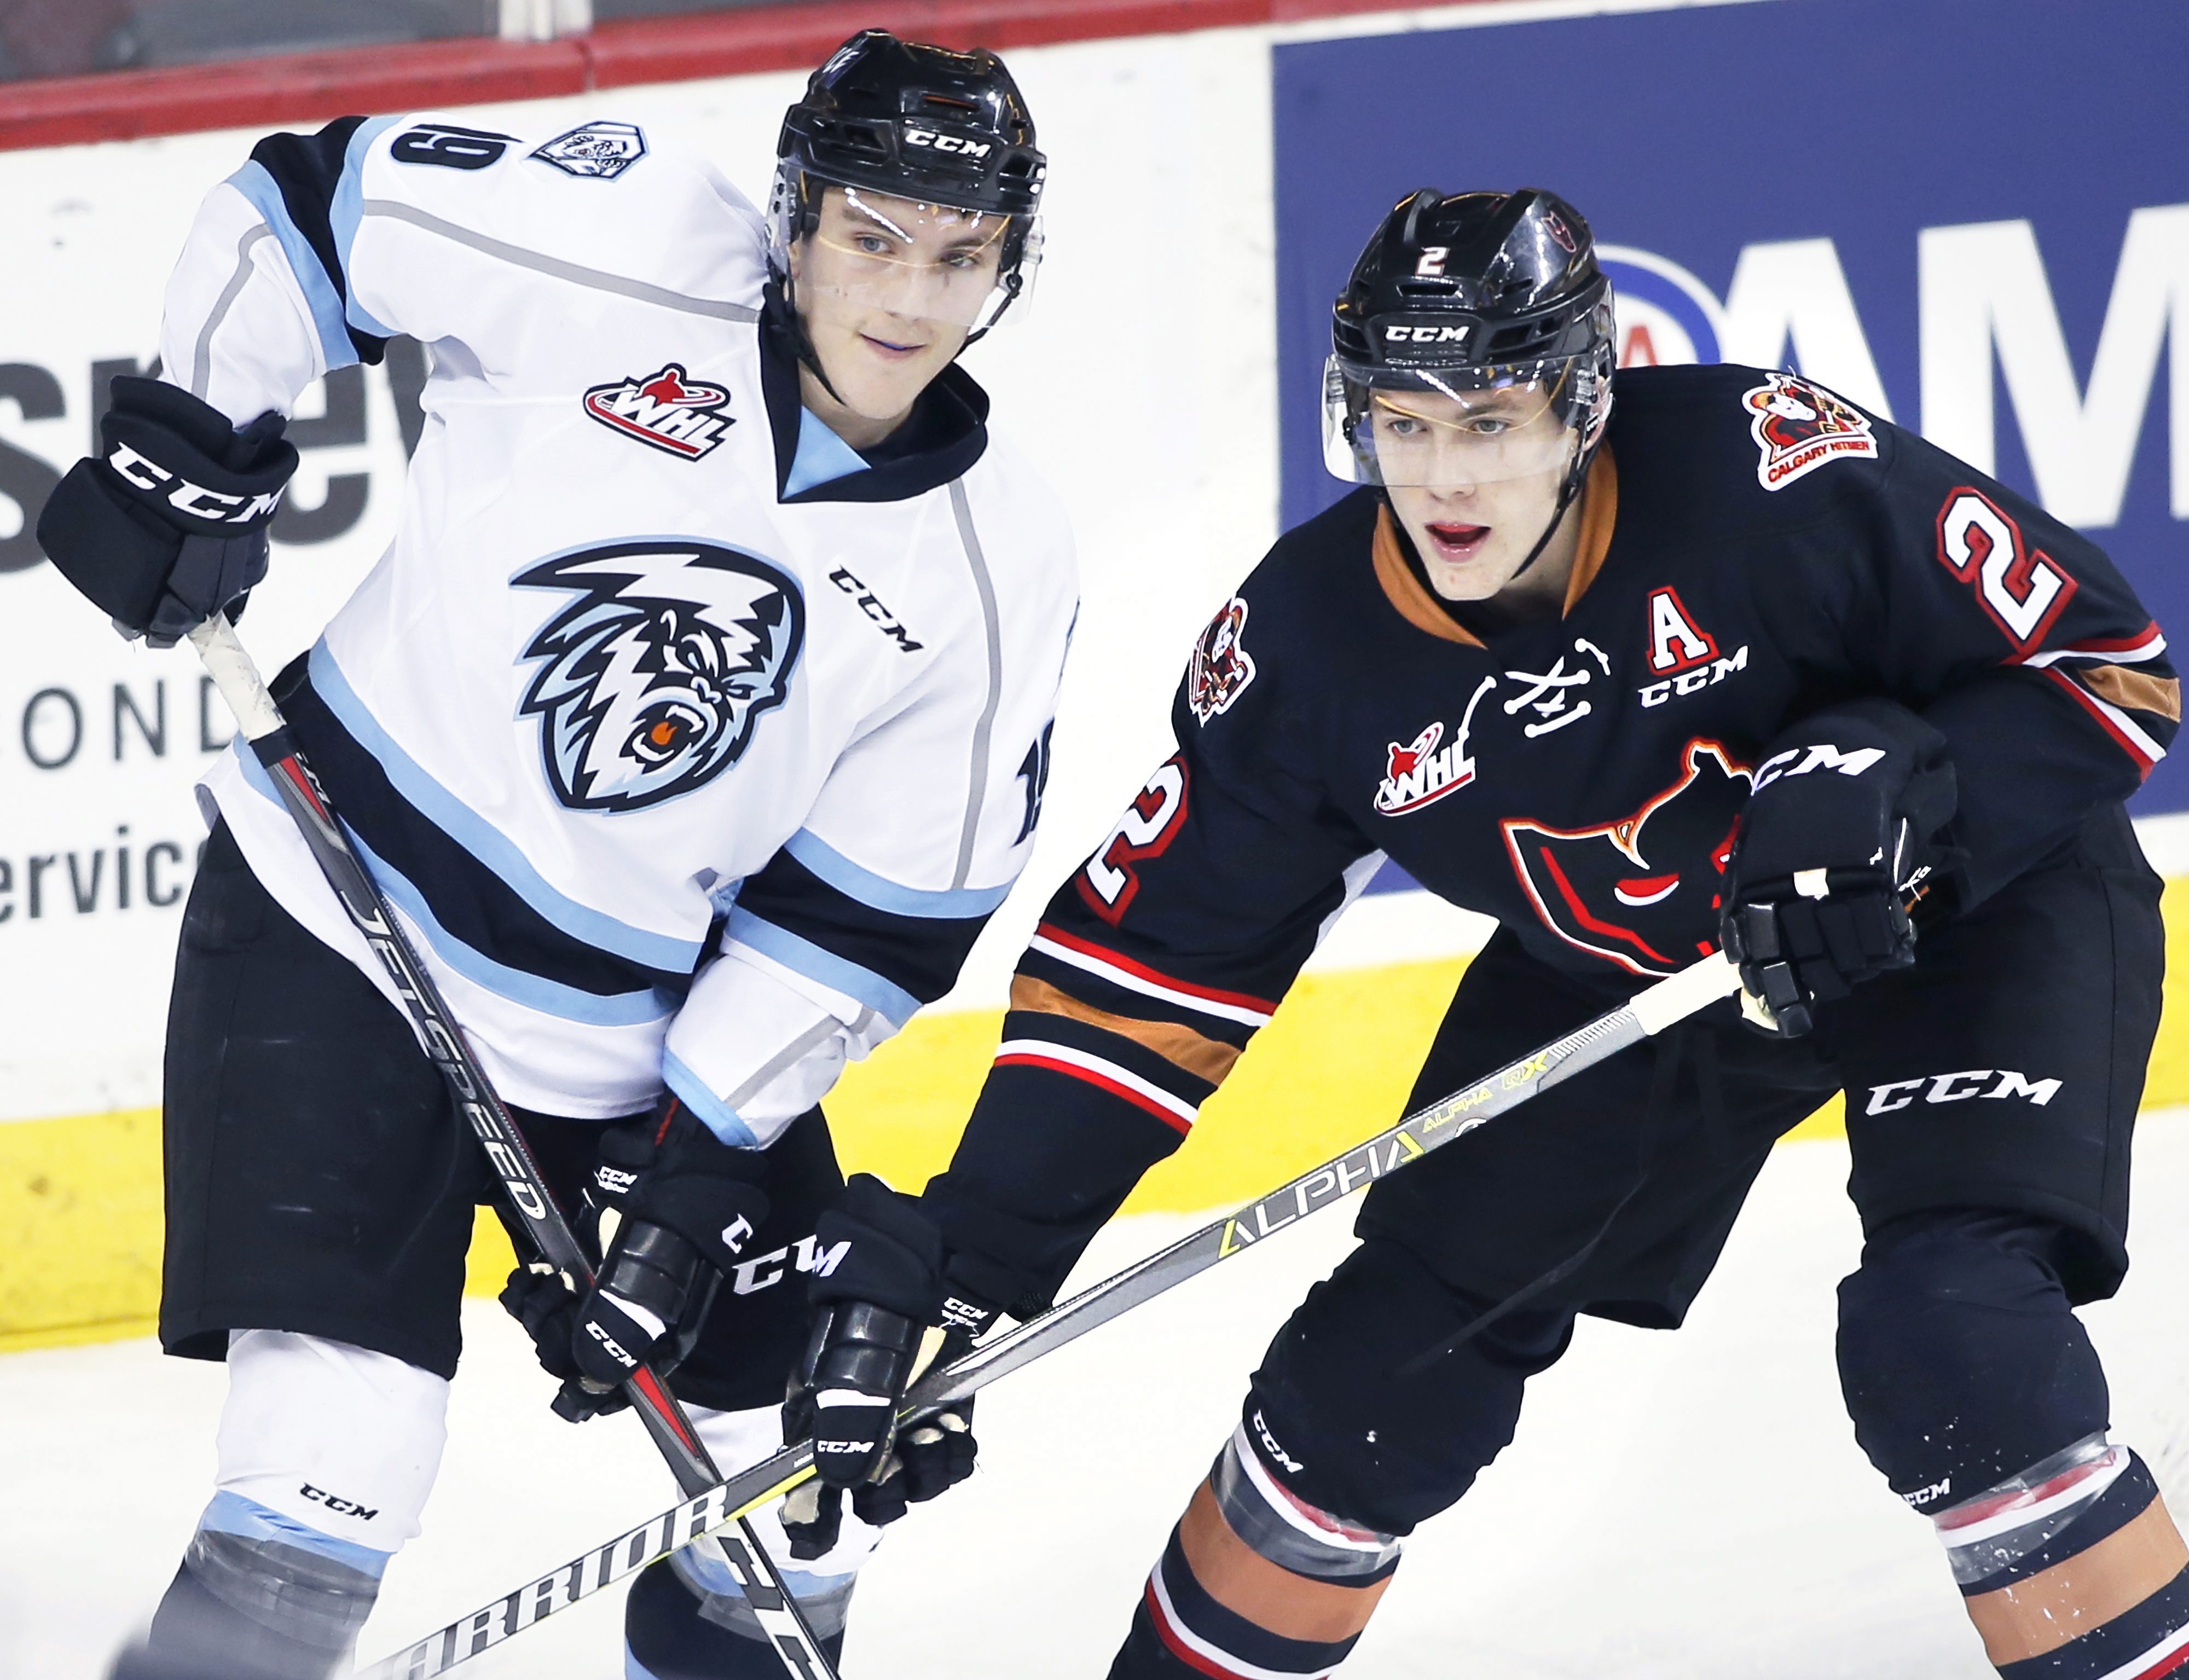 WHL star looking forward to leading Ice in hockey-mad Winnipeg